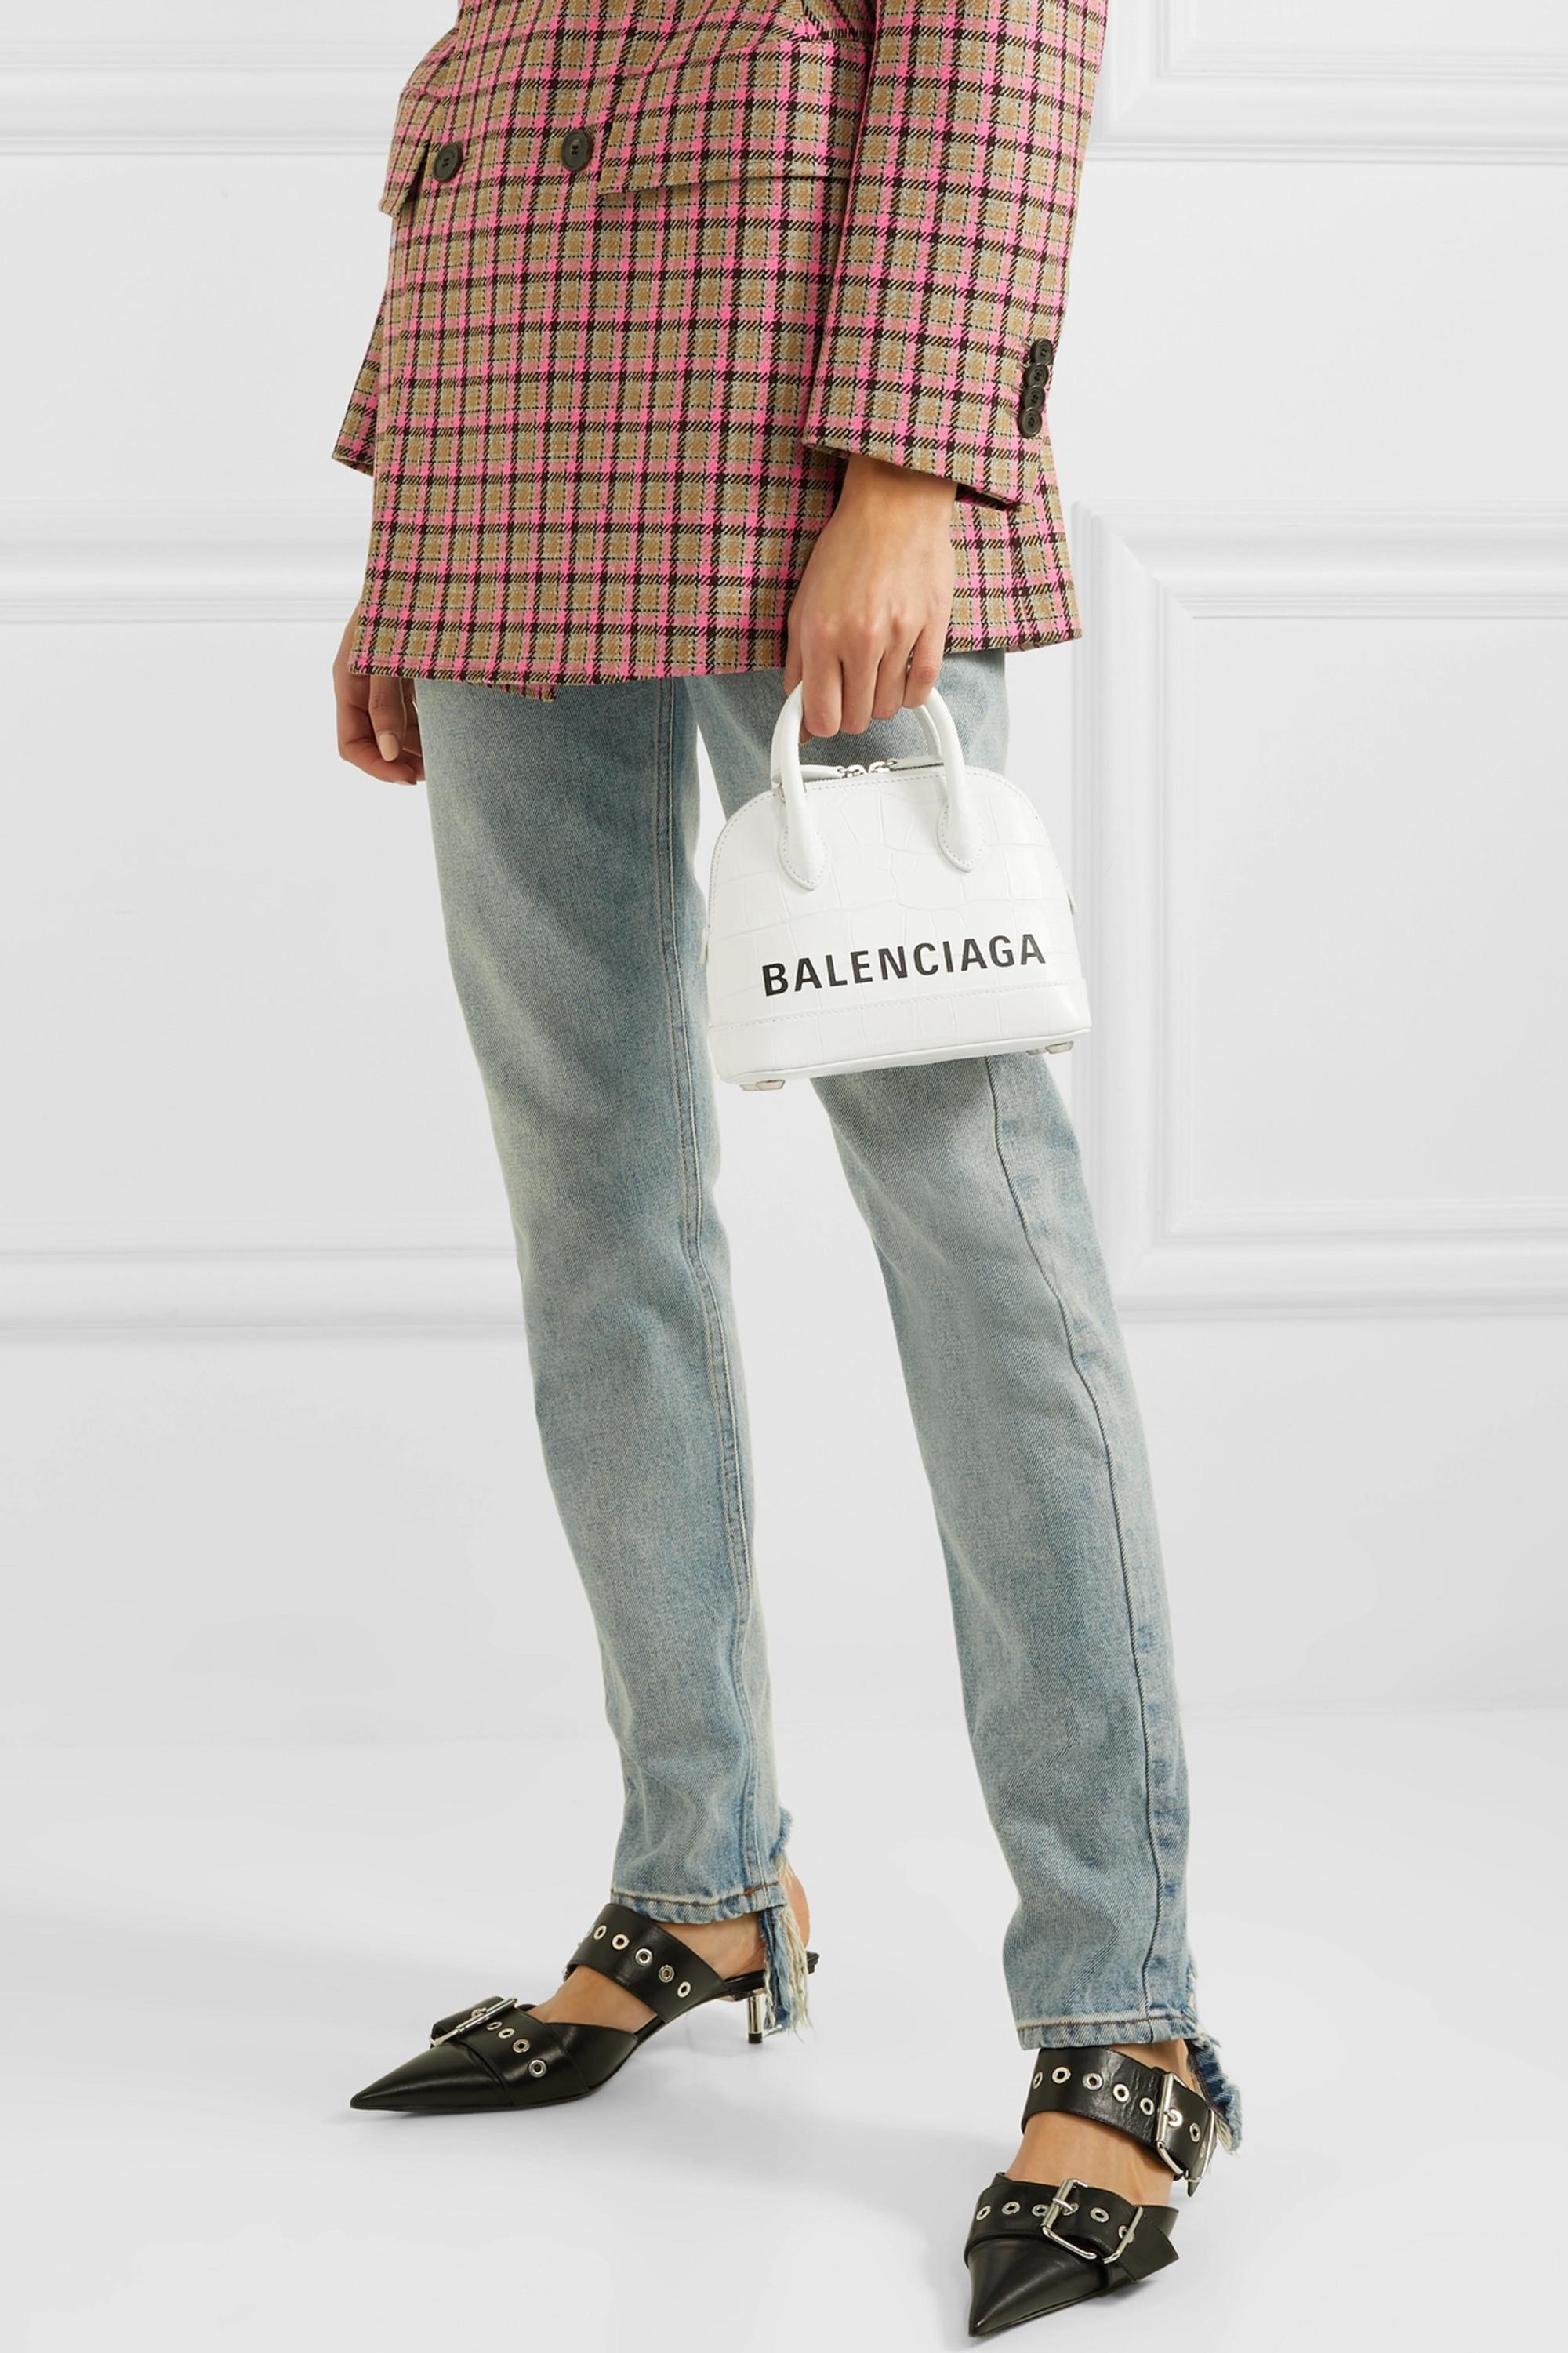 Balenciaga Leather Ville Xxs Top Handle Bag in White/Black (White 